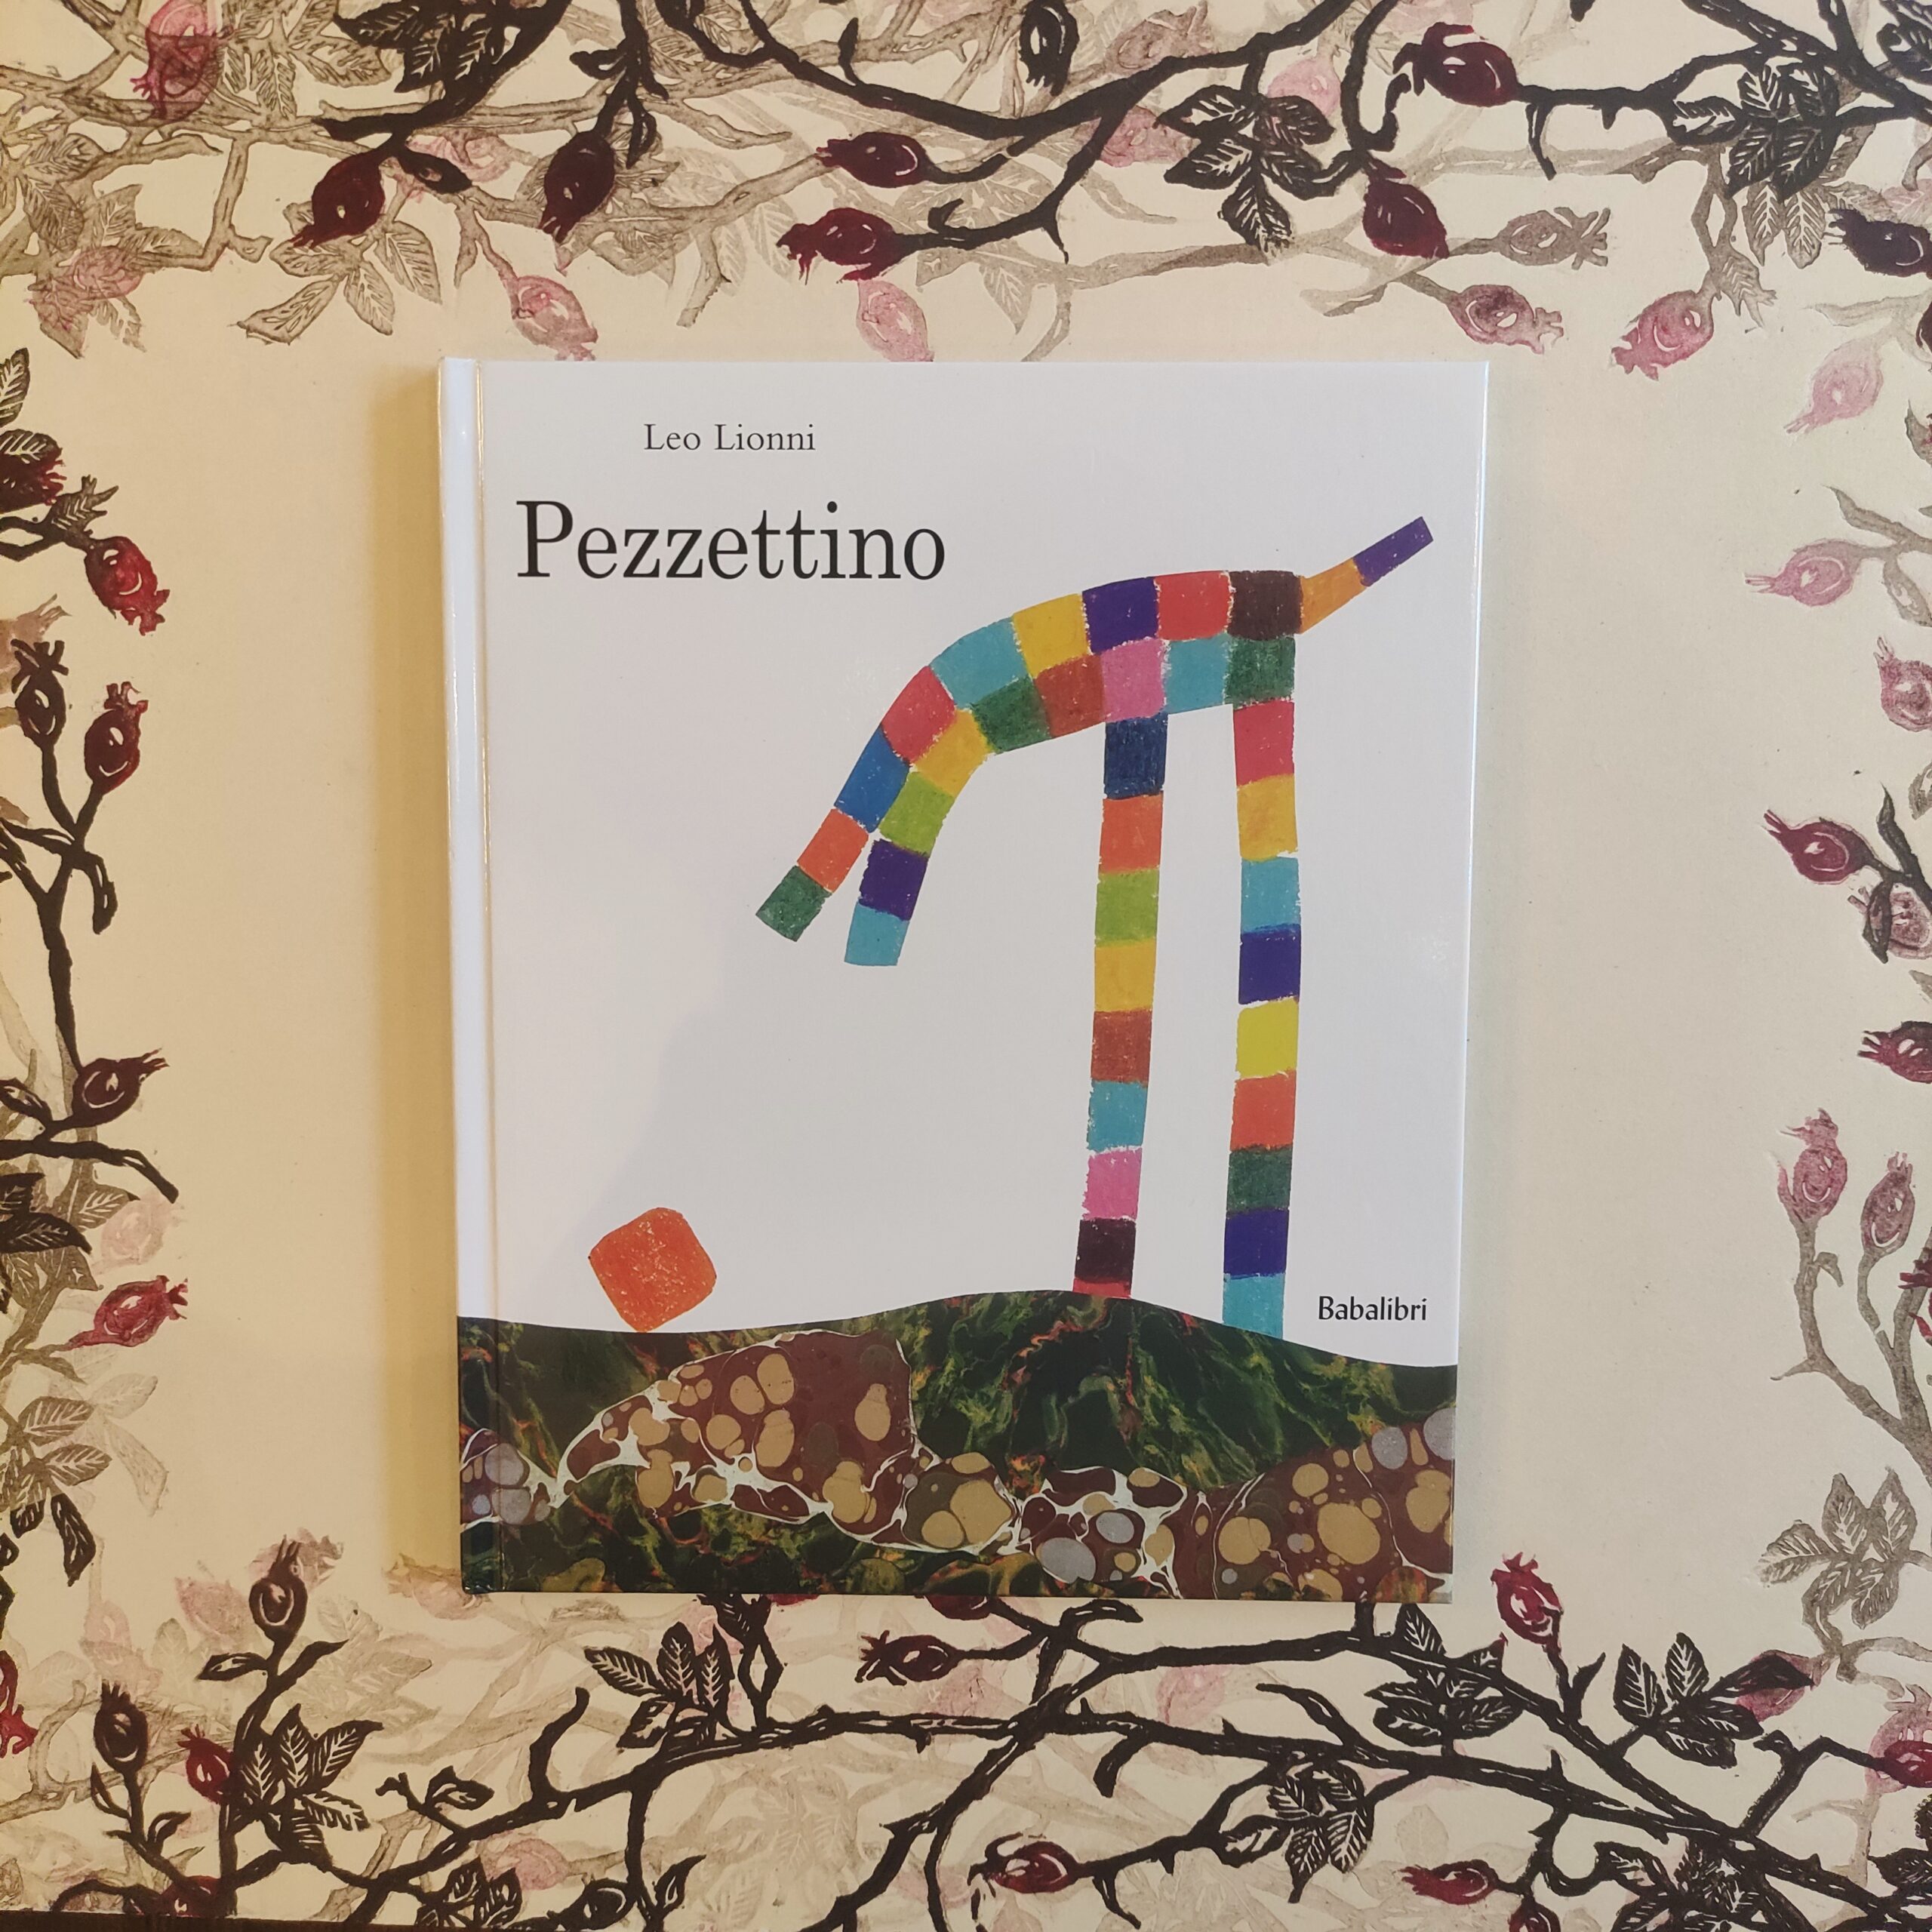 Pezzettino - Libreria per bambini Radice Labirinto - Carpi, Modena